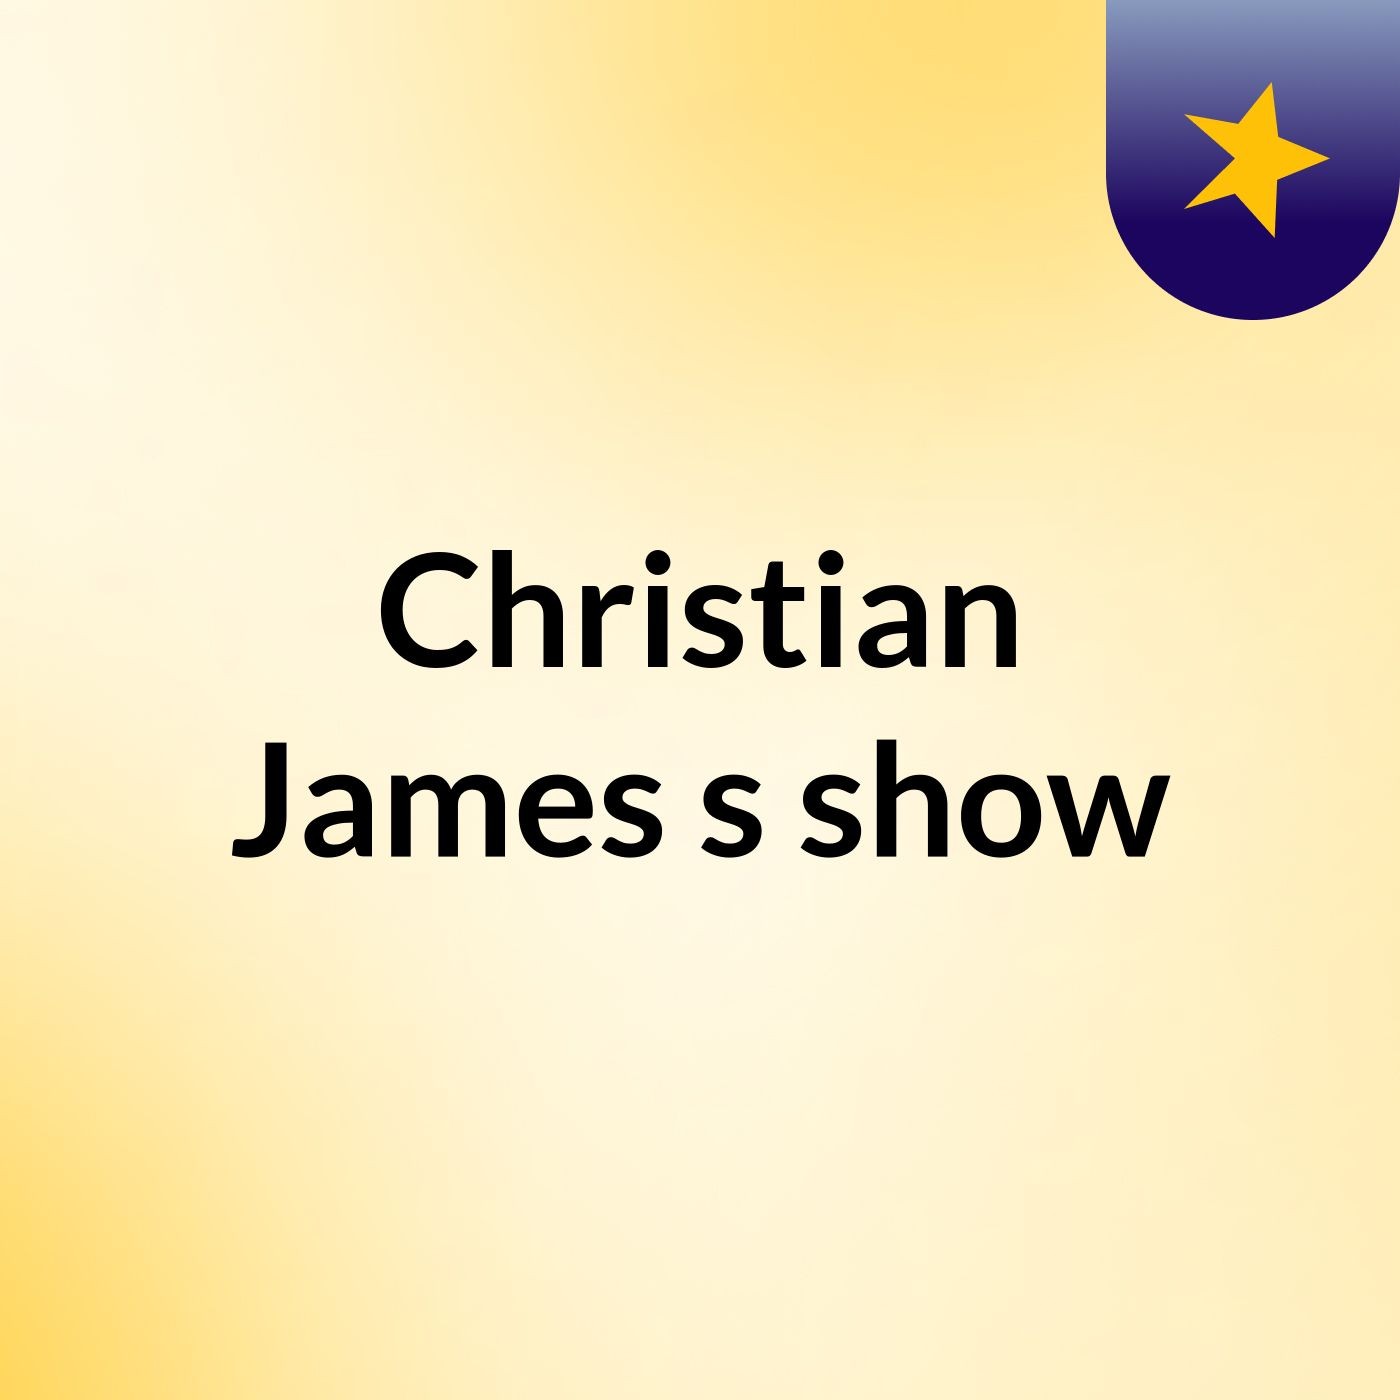 Christian James's show